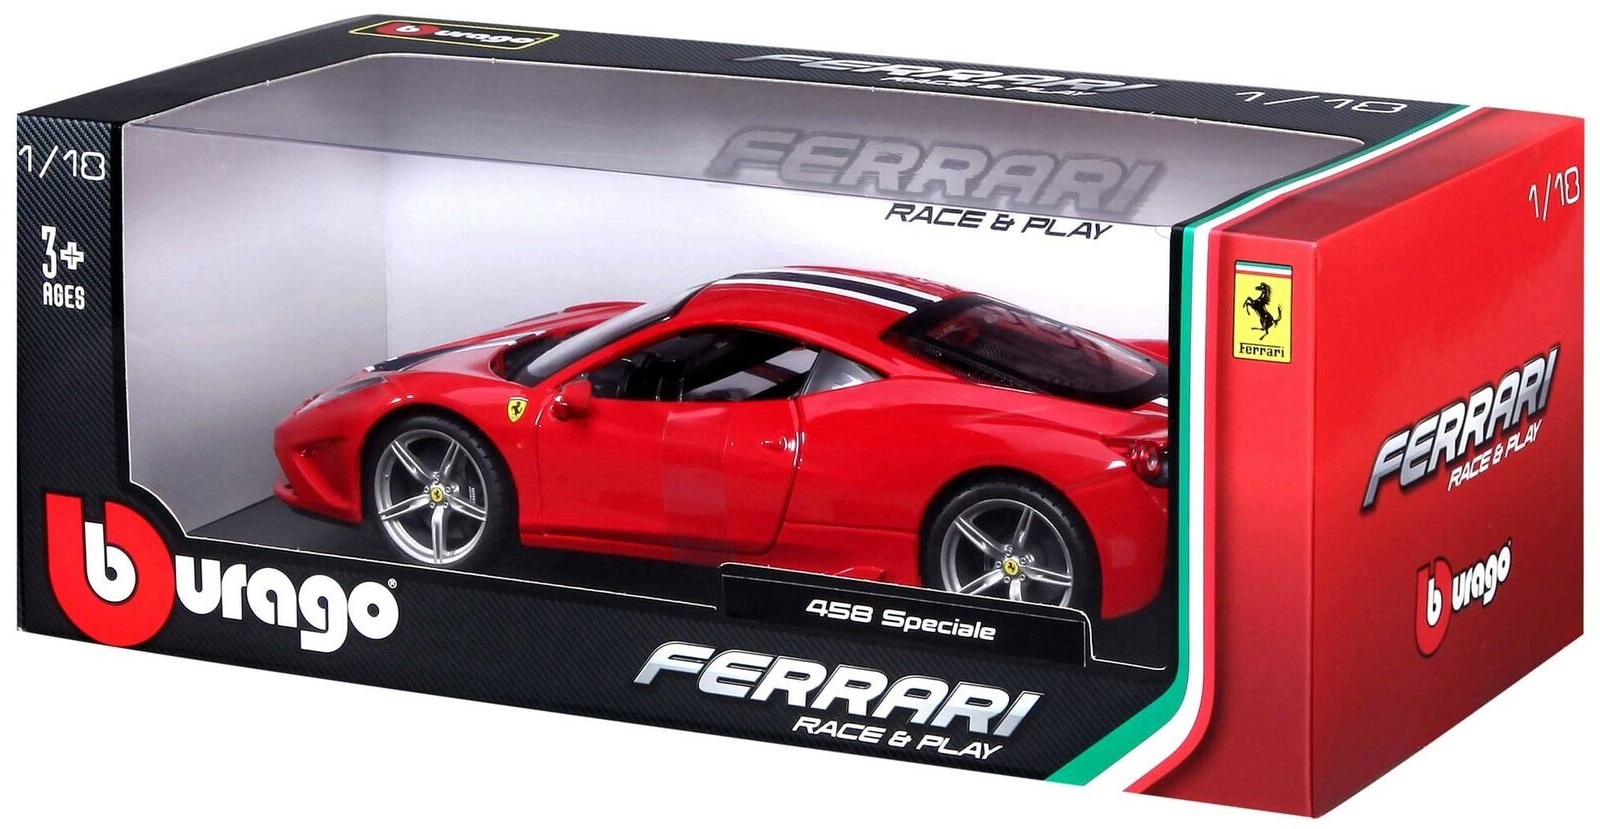 Samochód Ferrari 458 Speciale Red 1:18 Race&Play Bburago 18-16002